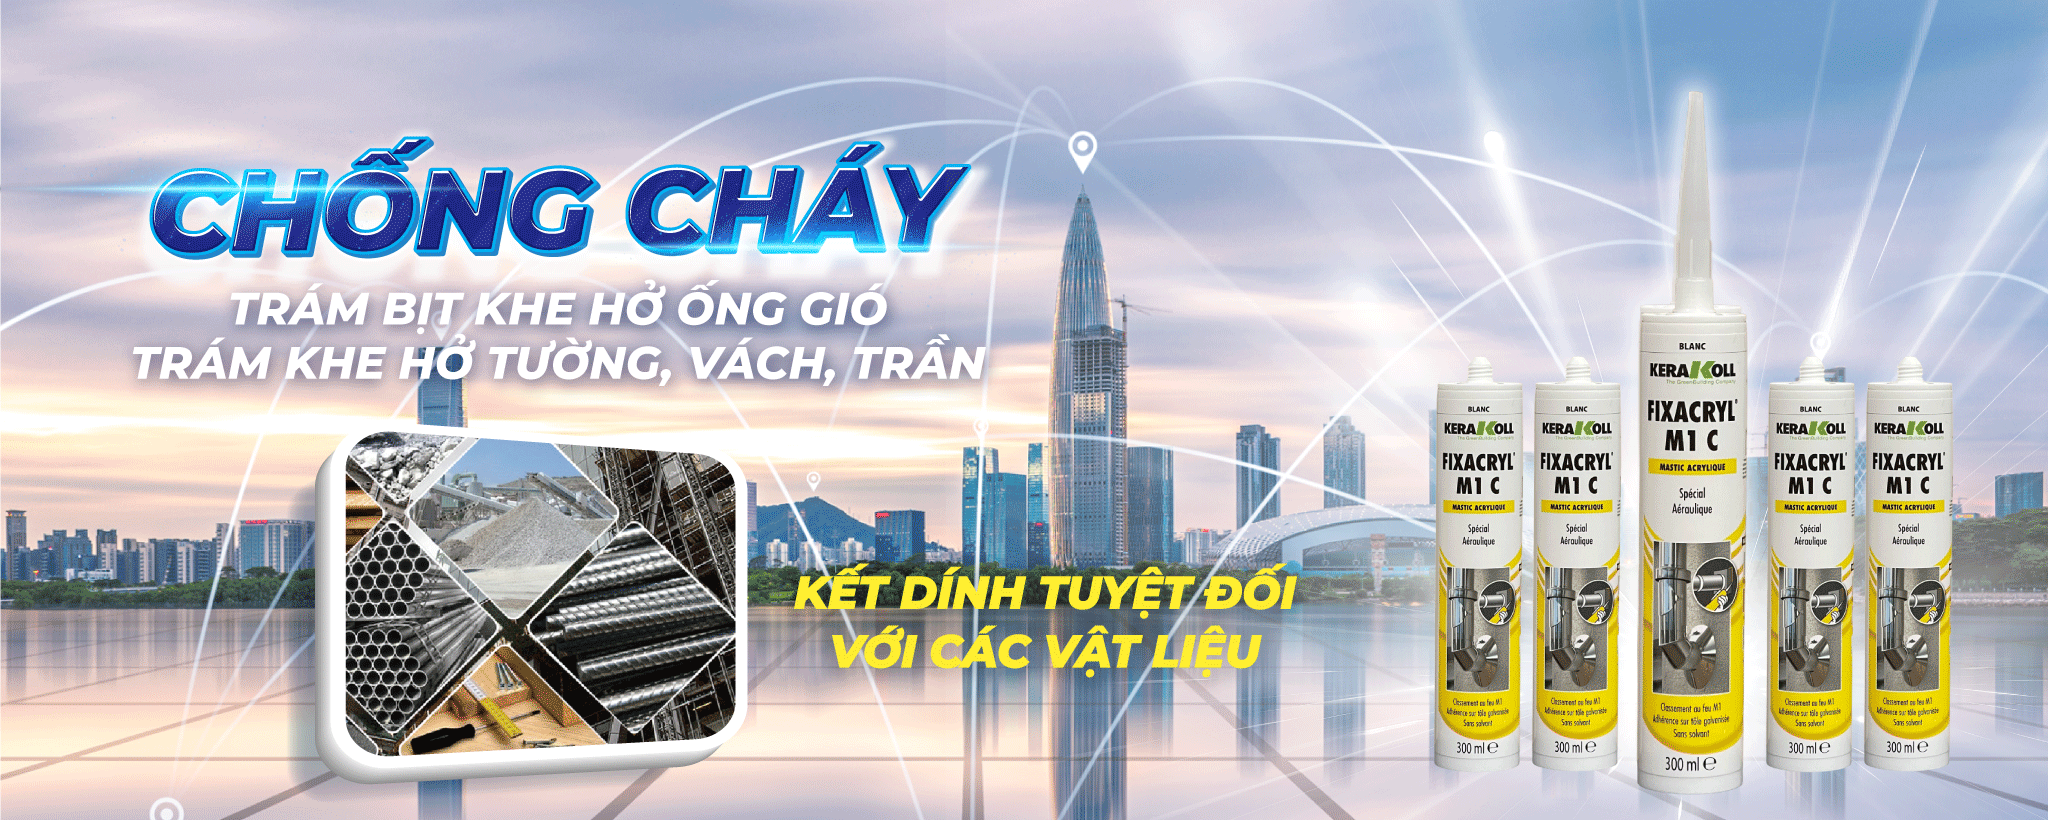 Keo Chong Chay M1c Thuan Thien Thanh